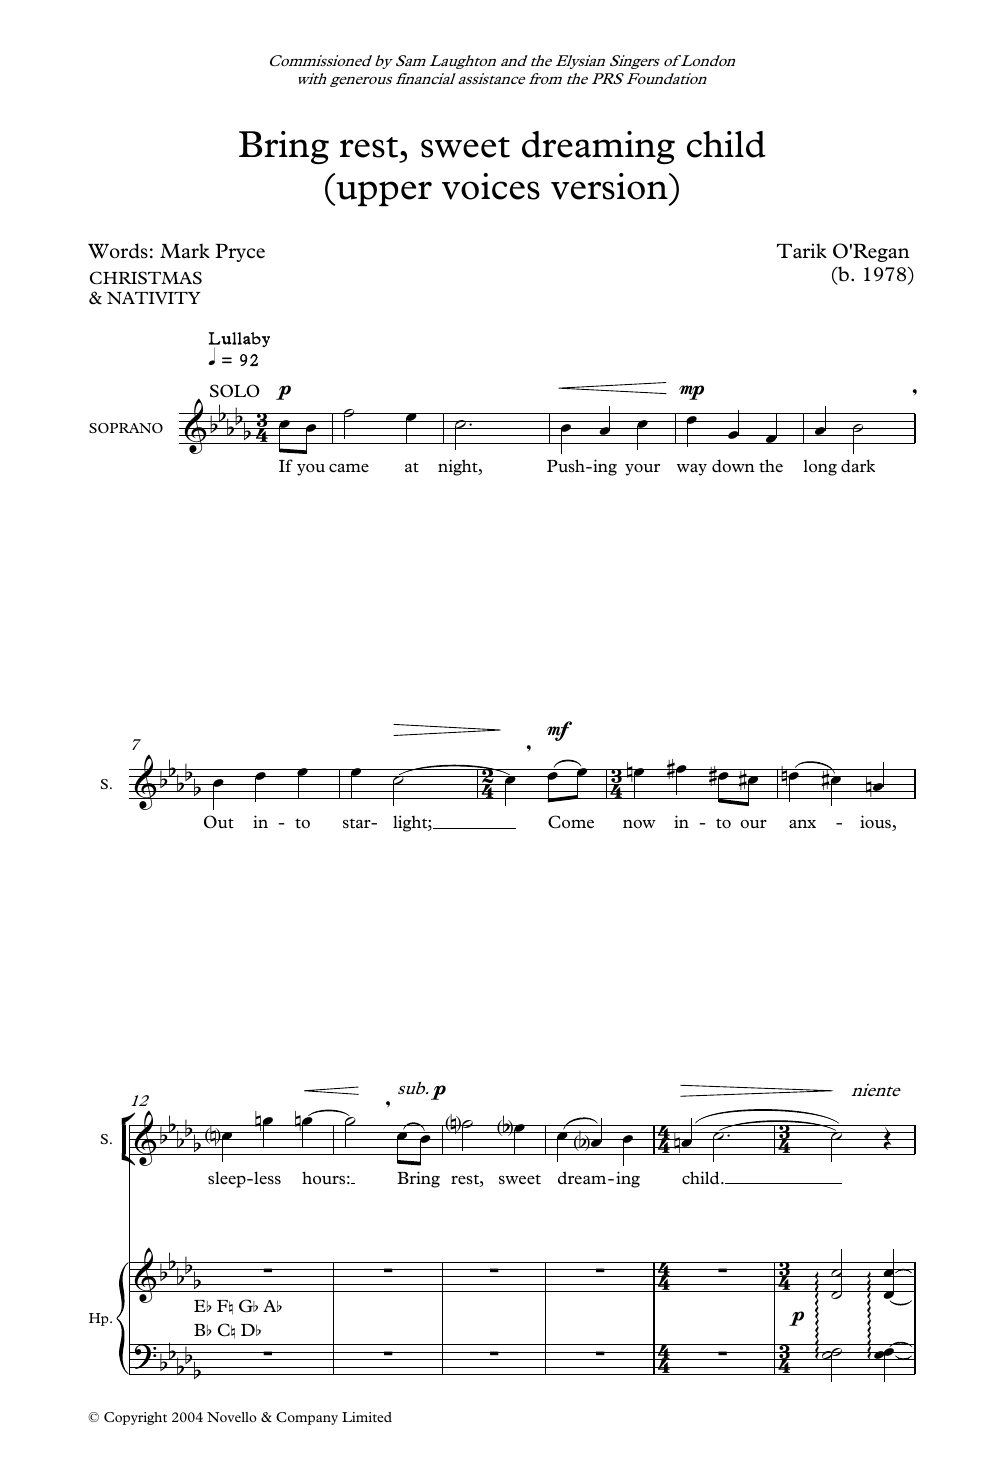 Tarik O'Regan Bring Rest Sweet Dreaming Child Sheet Music Notes & Chords for 2-Part Choir - Download or Print PDF